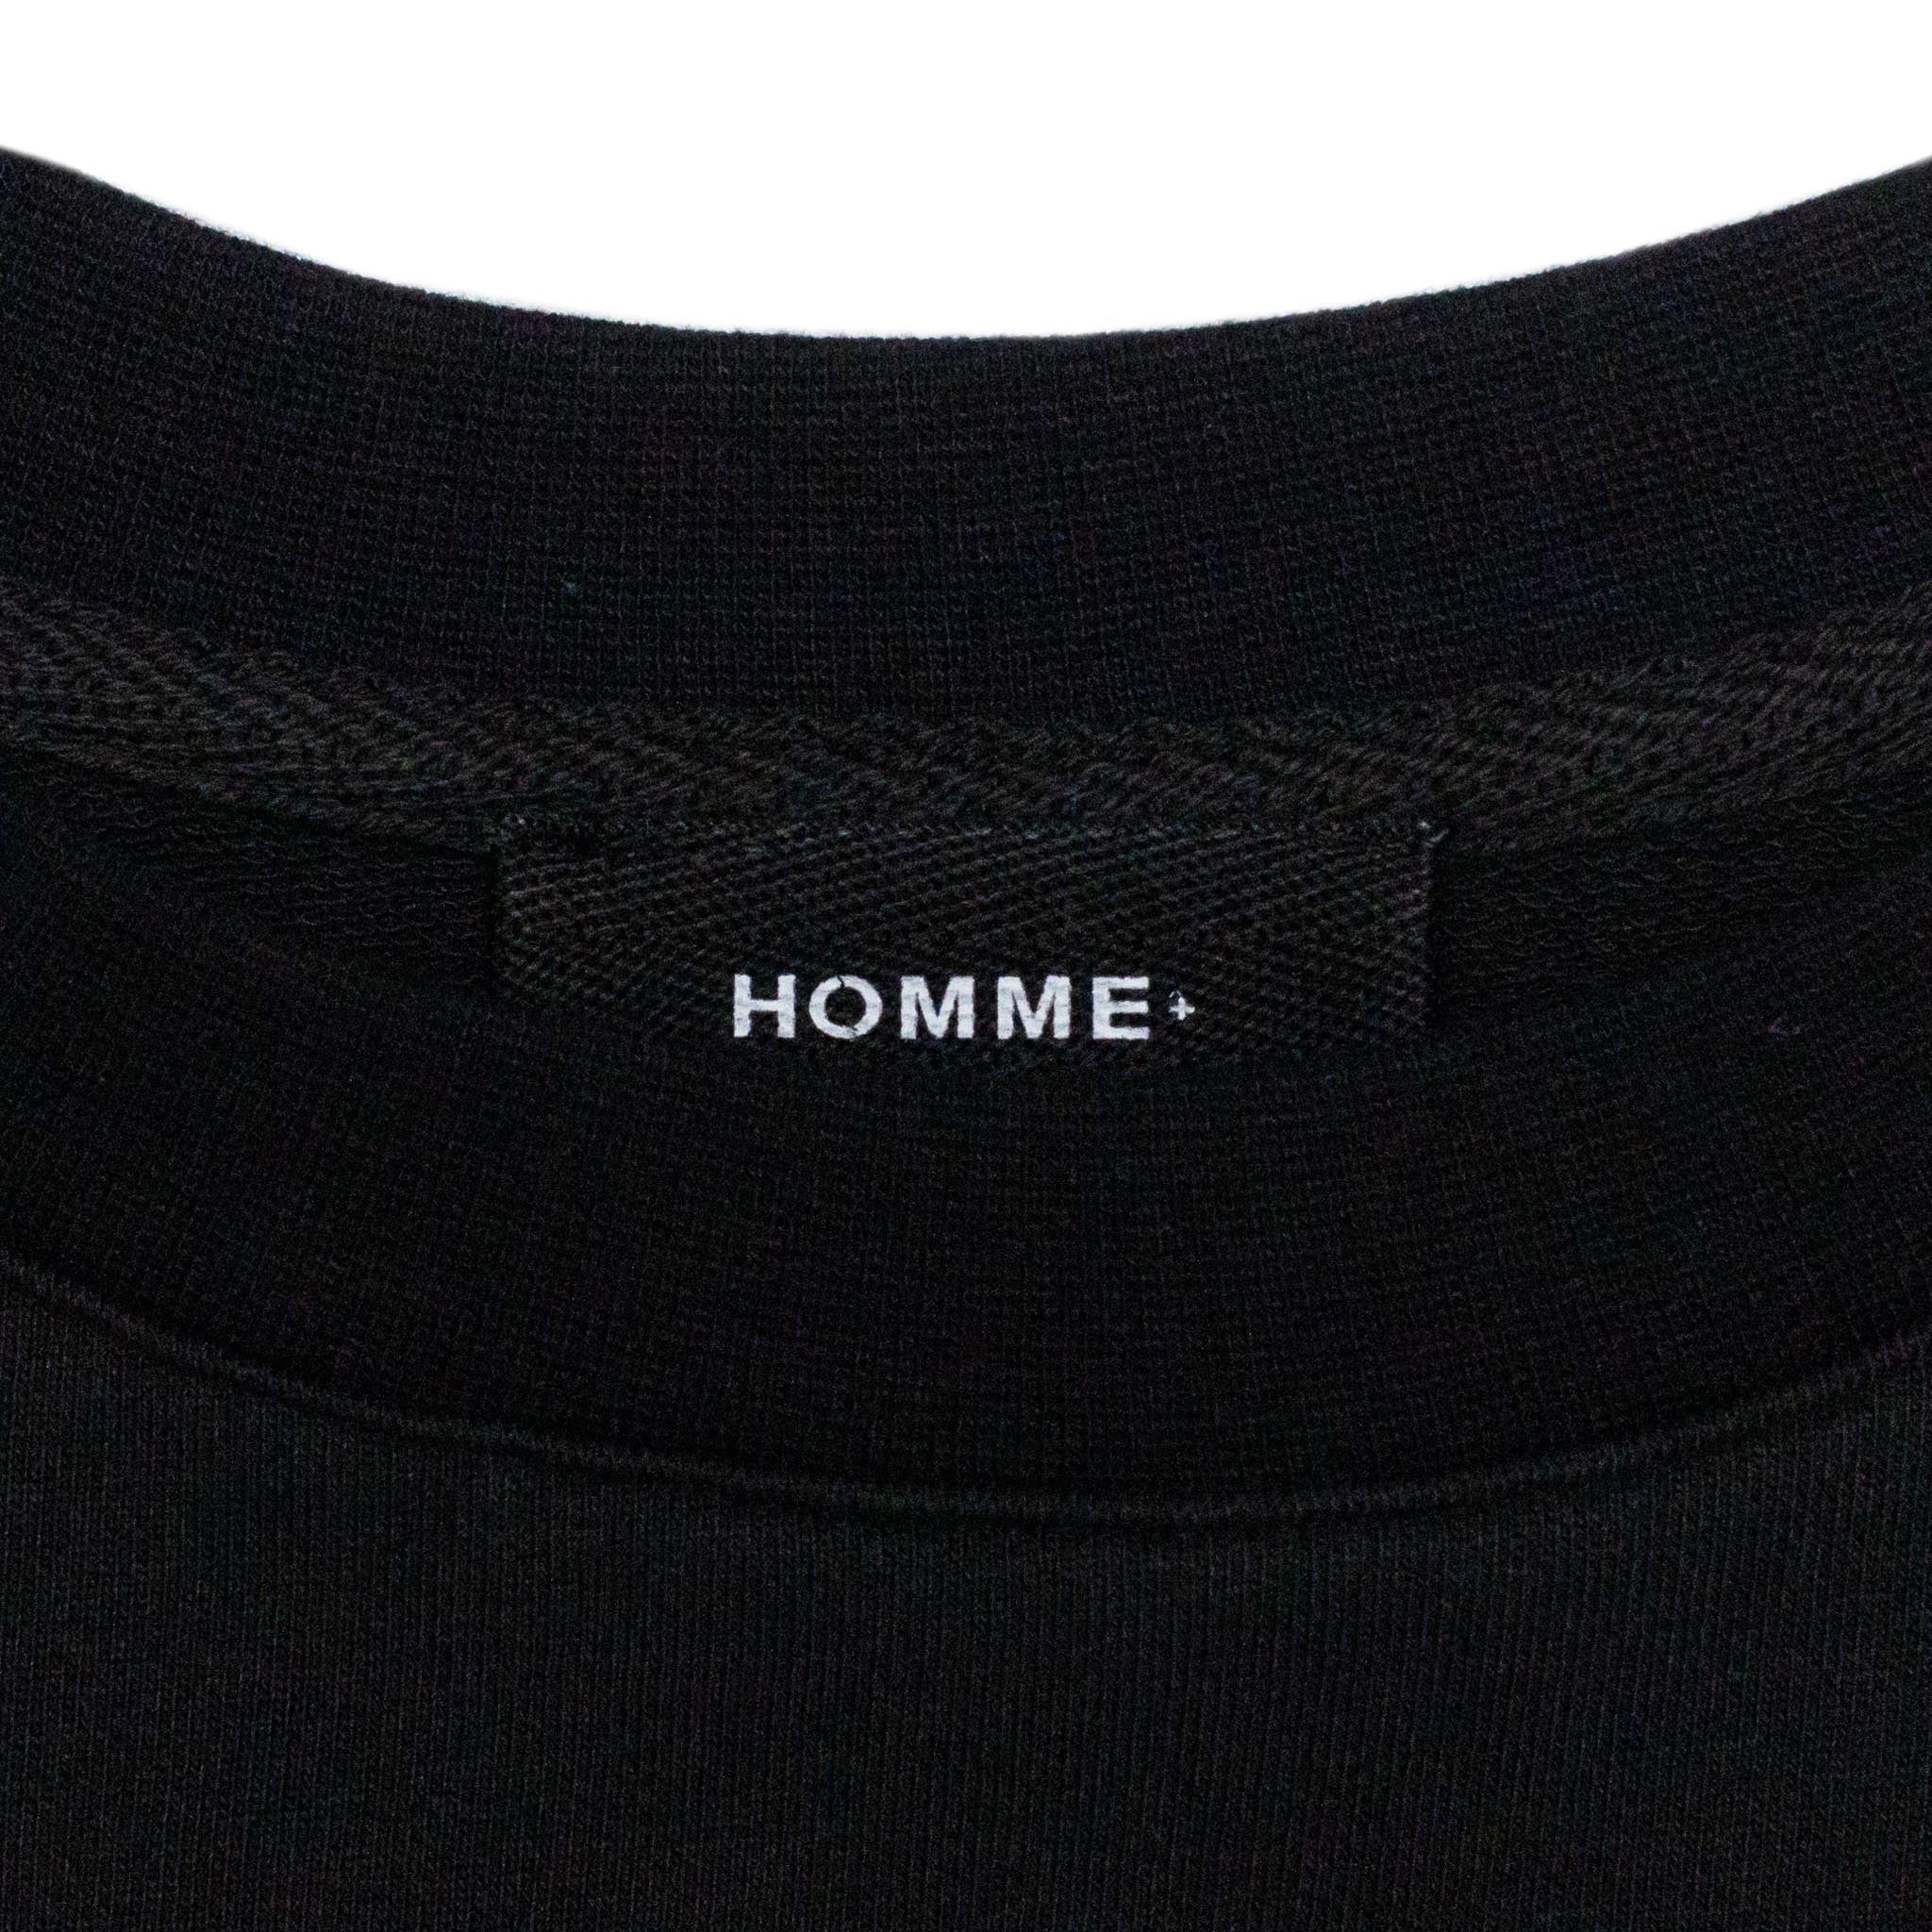 HOMME+ Swirled Homme Tee Black